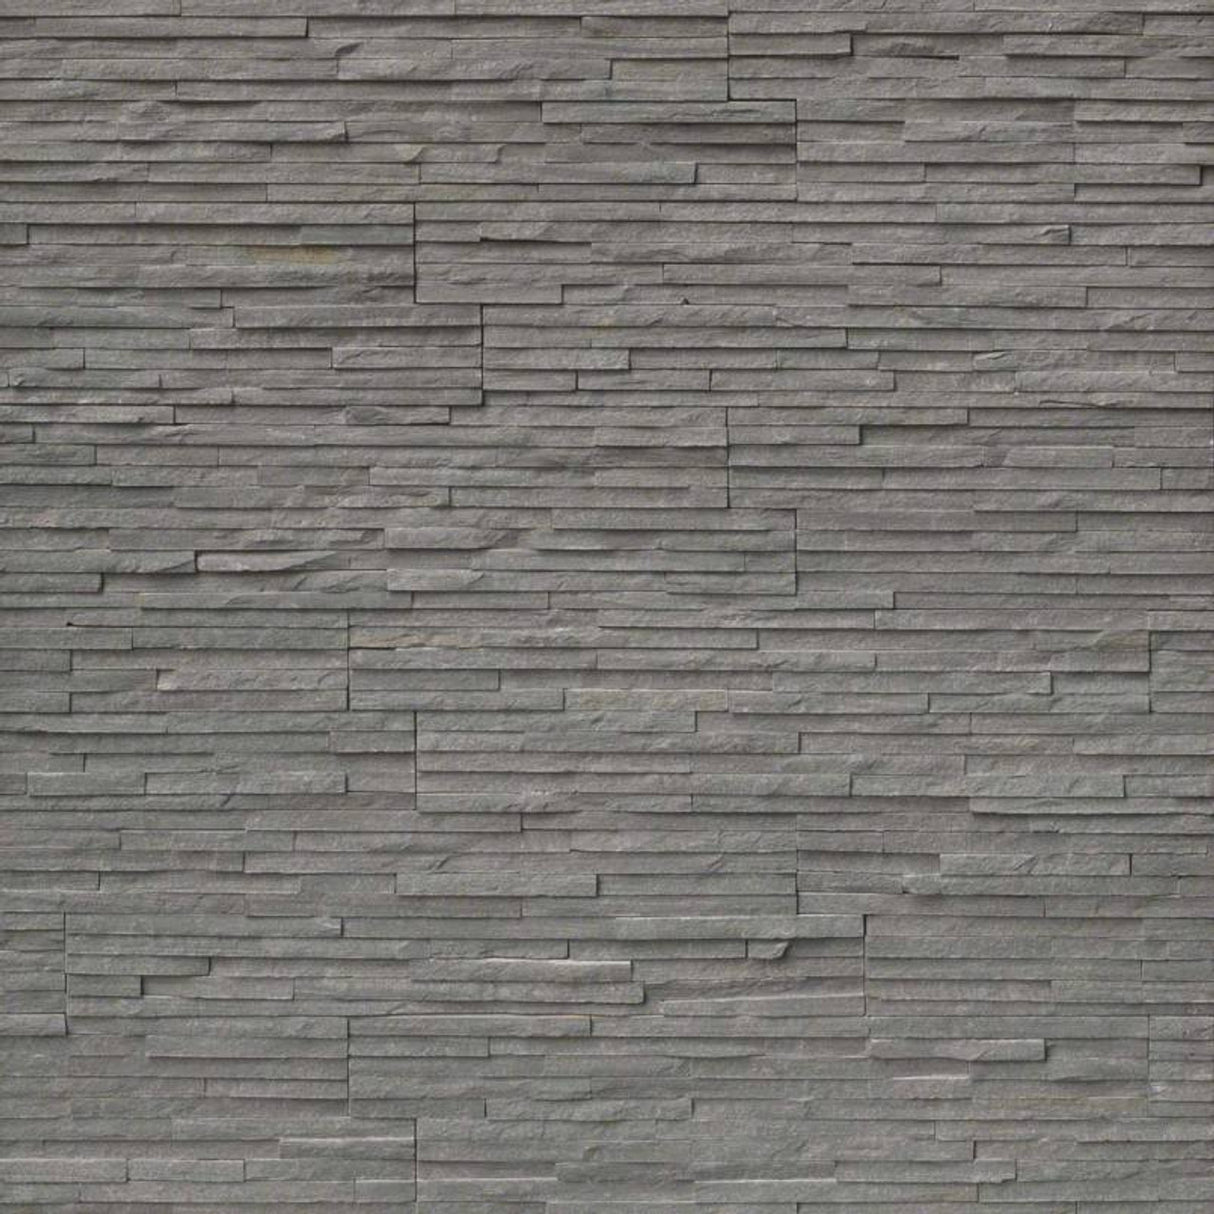 Charcoal pencil splitface ledger panel 6X24 slate wall tile LPNLSCHA624 PEN product shot multiple tiles angle view